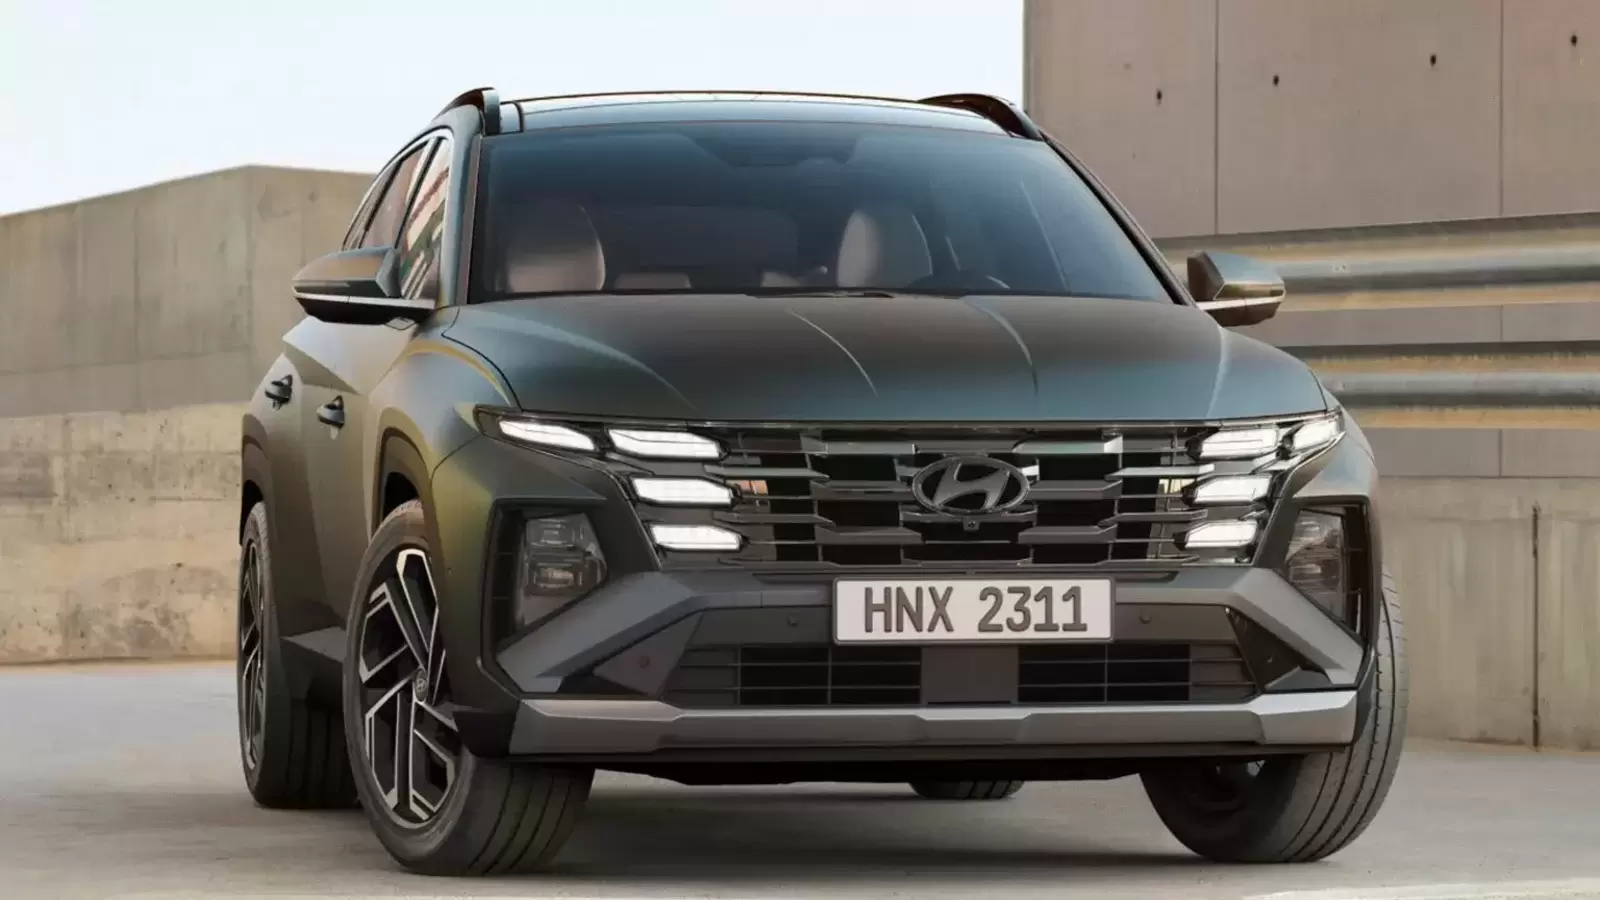 New Hyundai Tucson revealed: everything we know so far